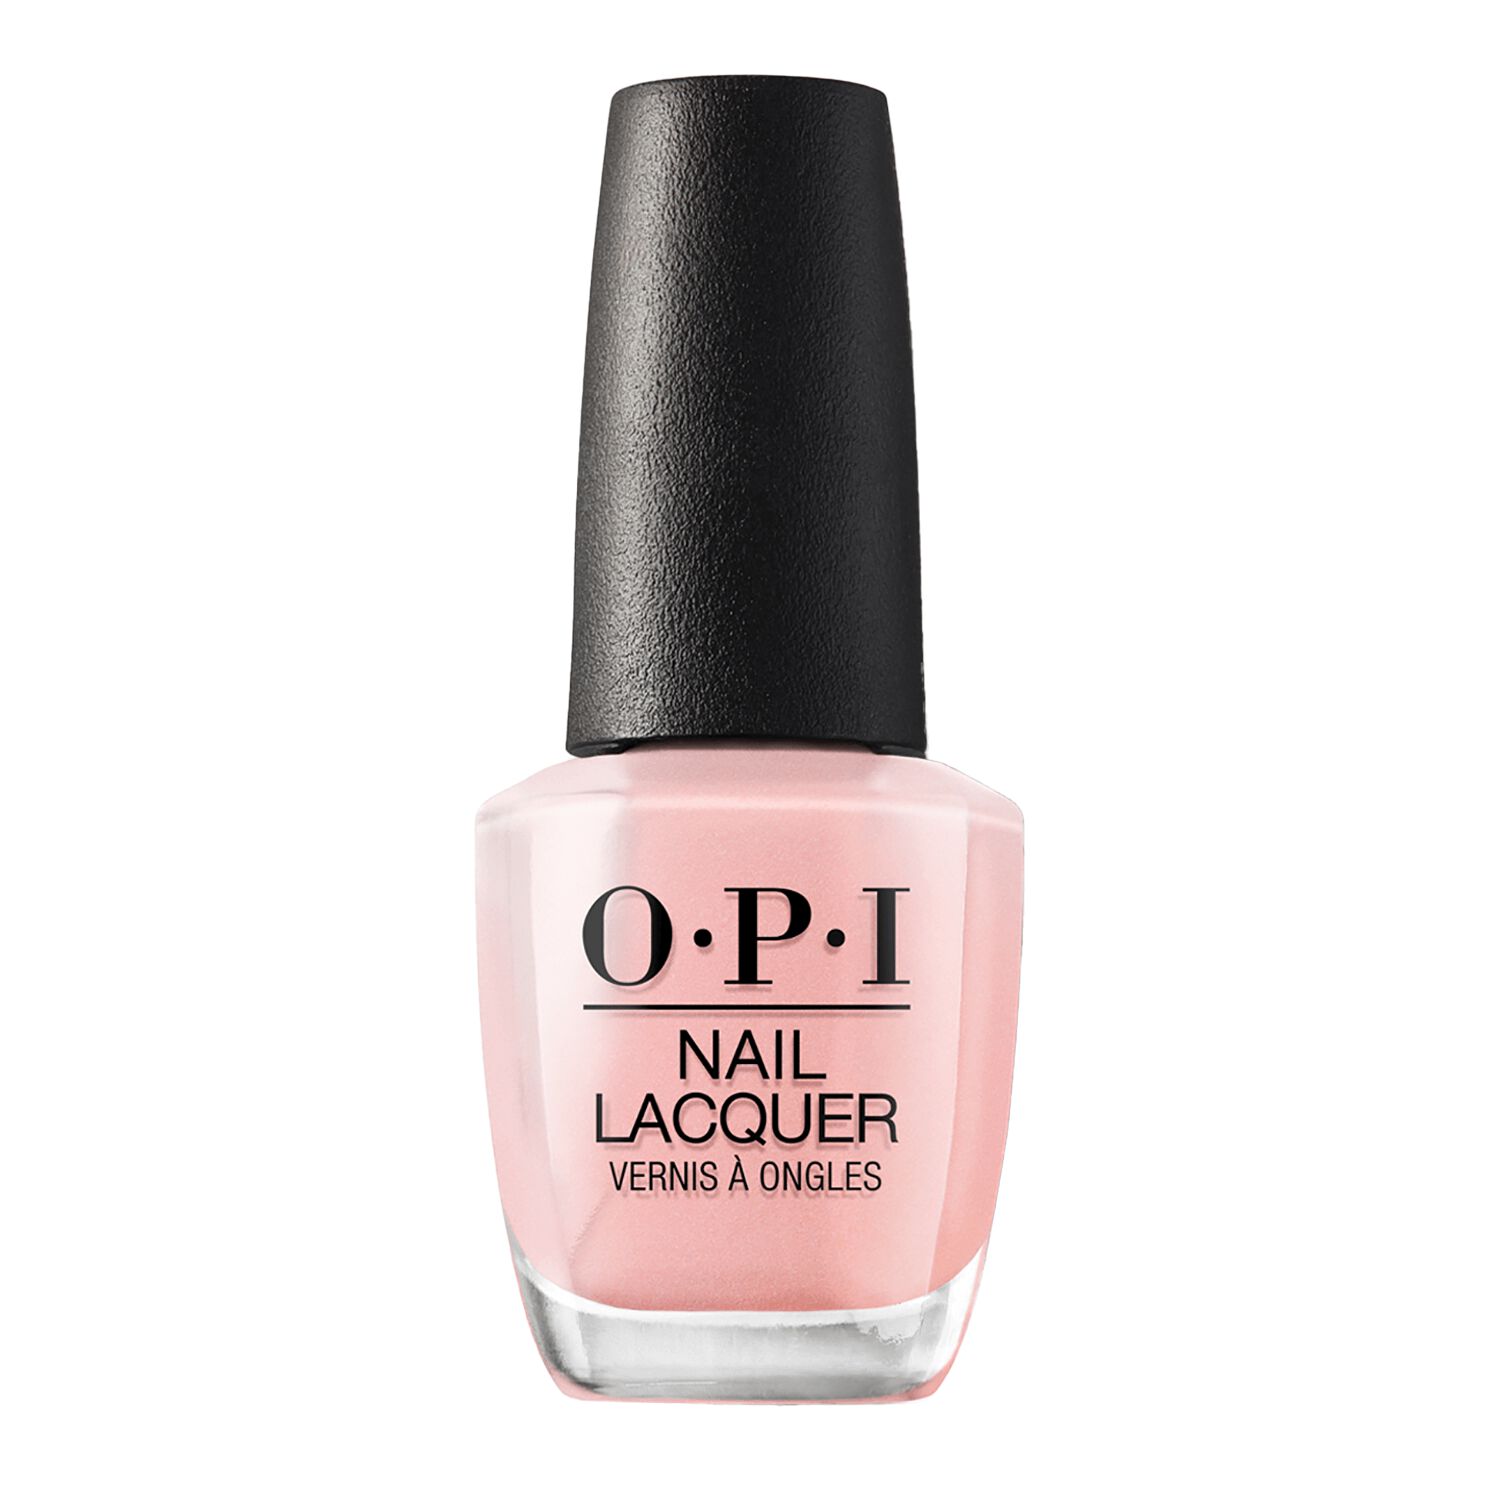 OPI Nail Lacquer in Rosy Future - OPI Nail Polish | Sally Beauty